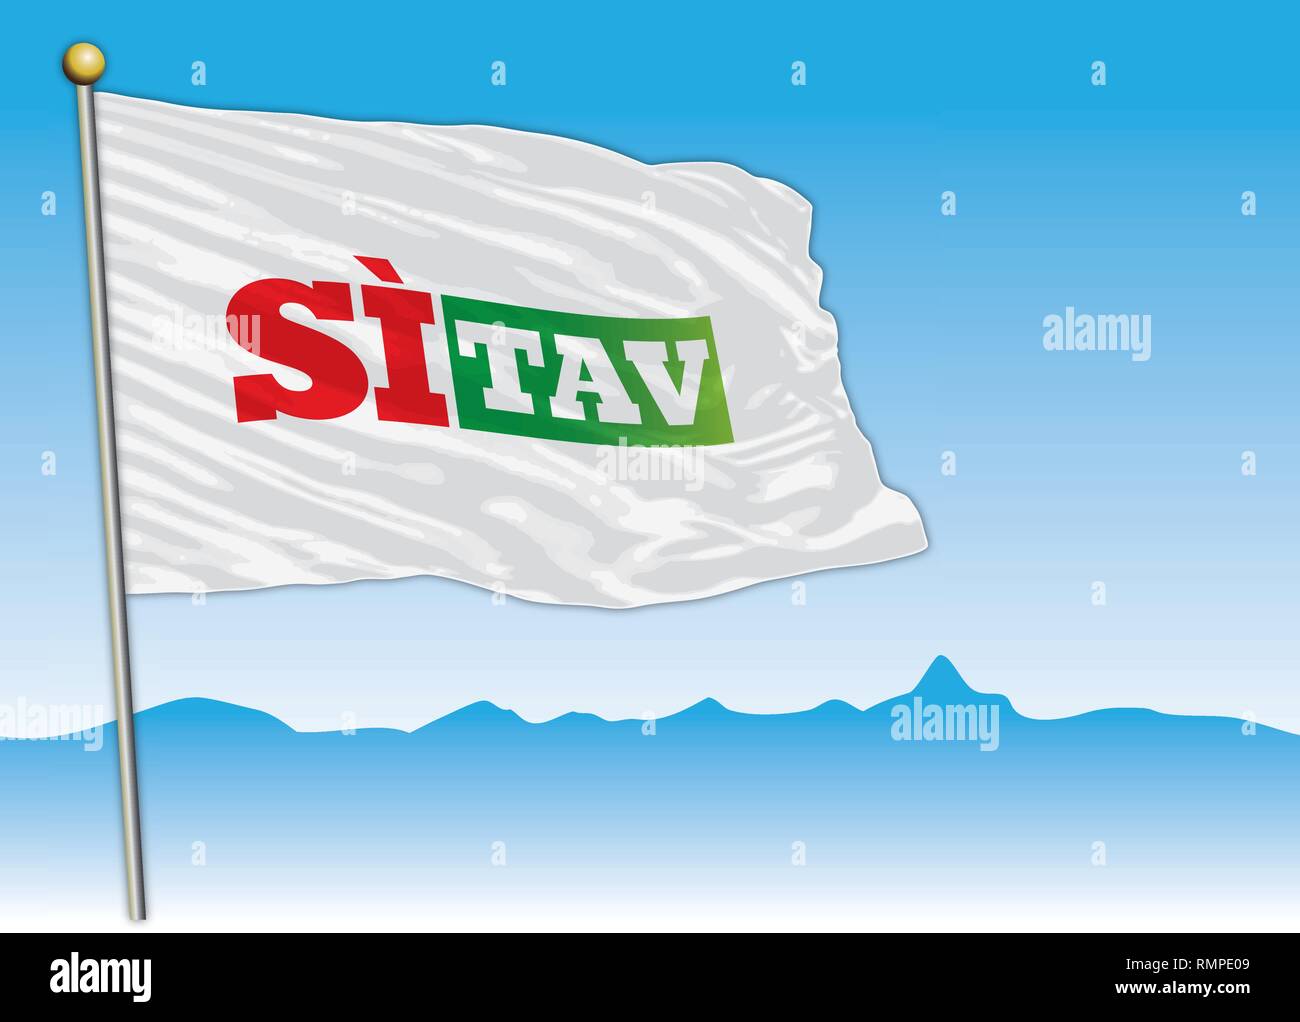 Si Tav movement flag, Italy, vector illustration Stock Vector